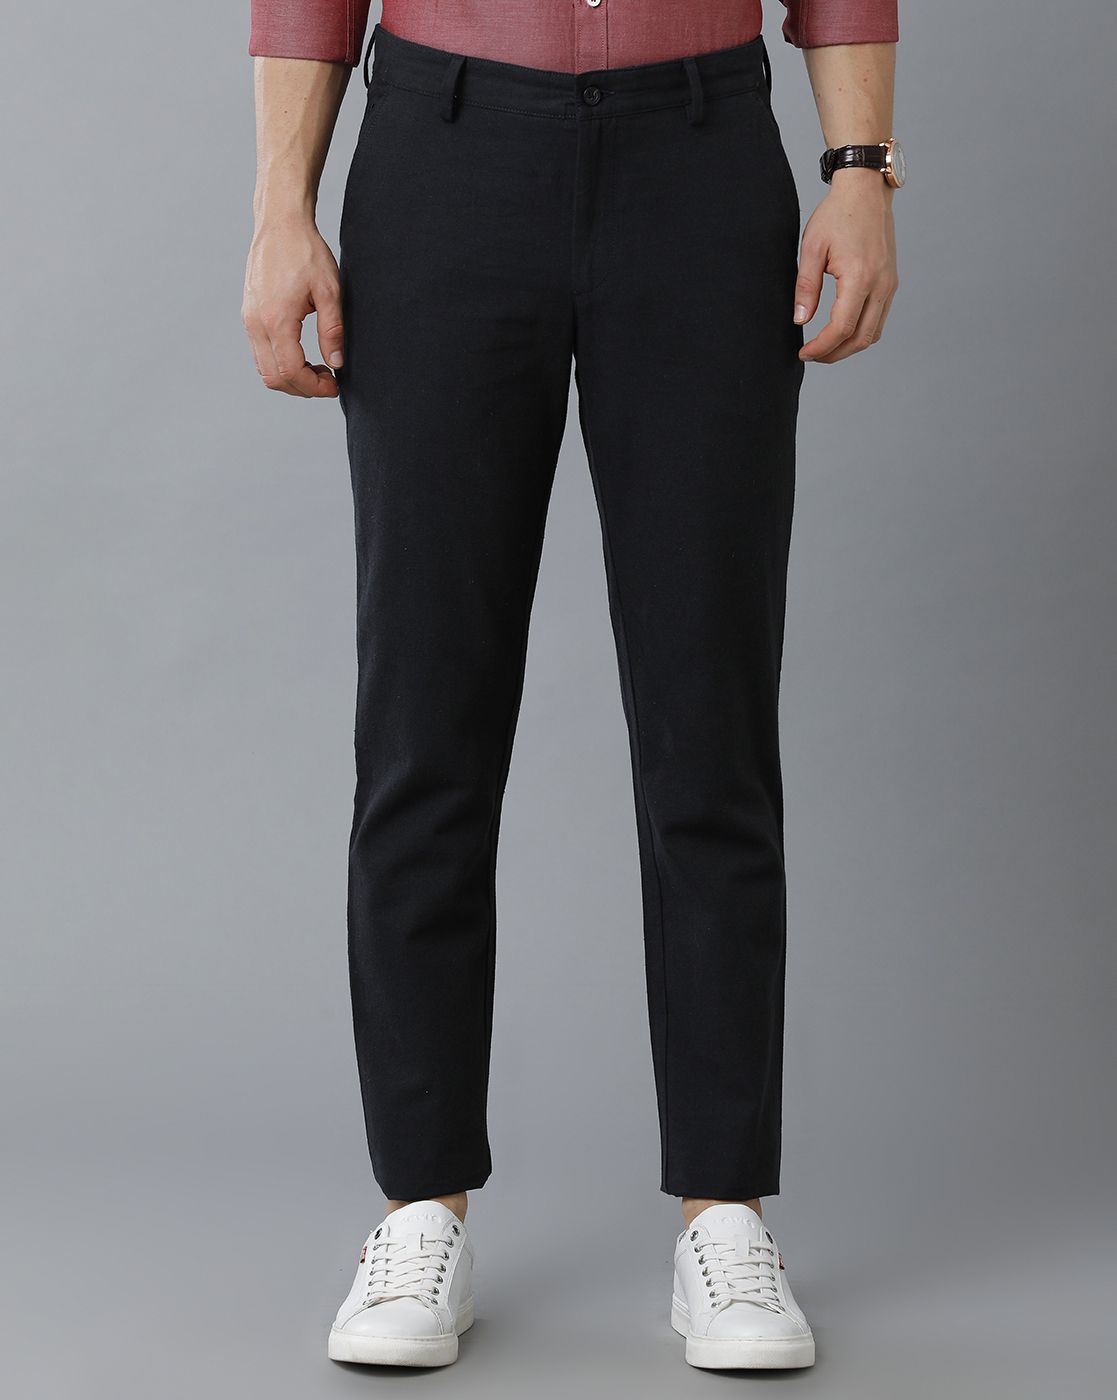 Designerdarji Formal Men's Straight Casual Trousers Linen White Pant for  Mens Plus Size Available - Etsy